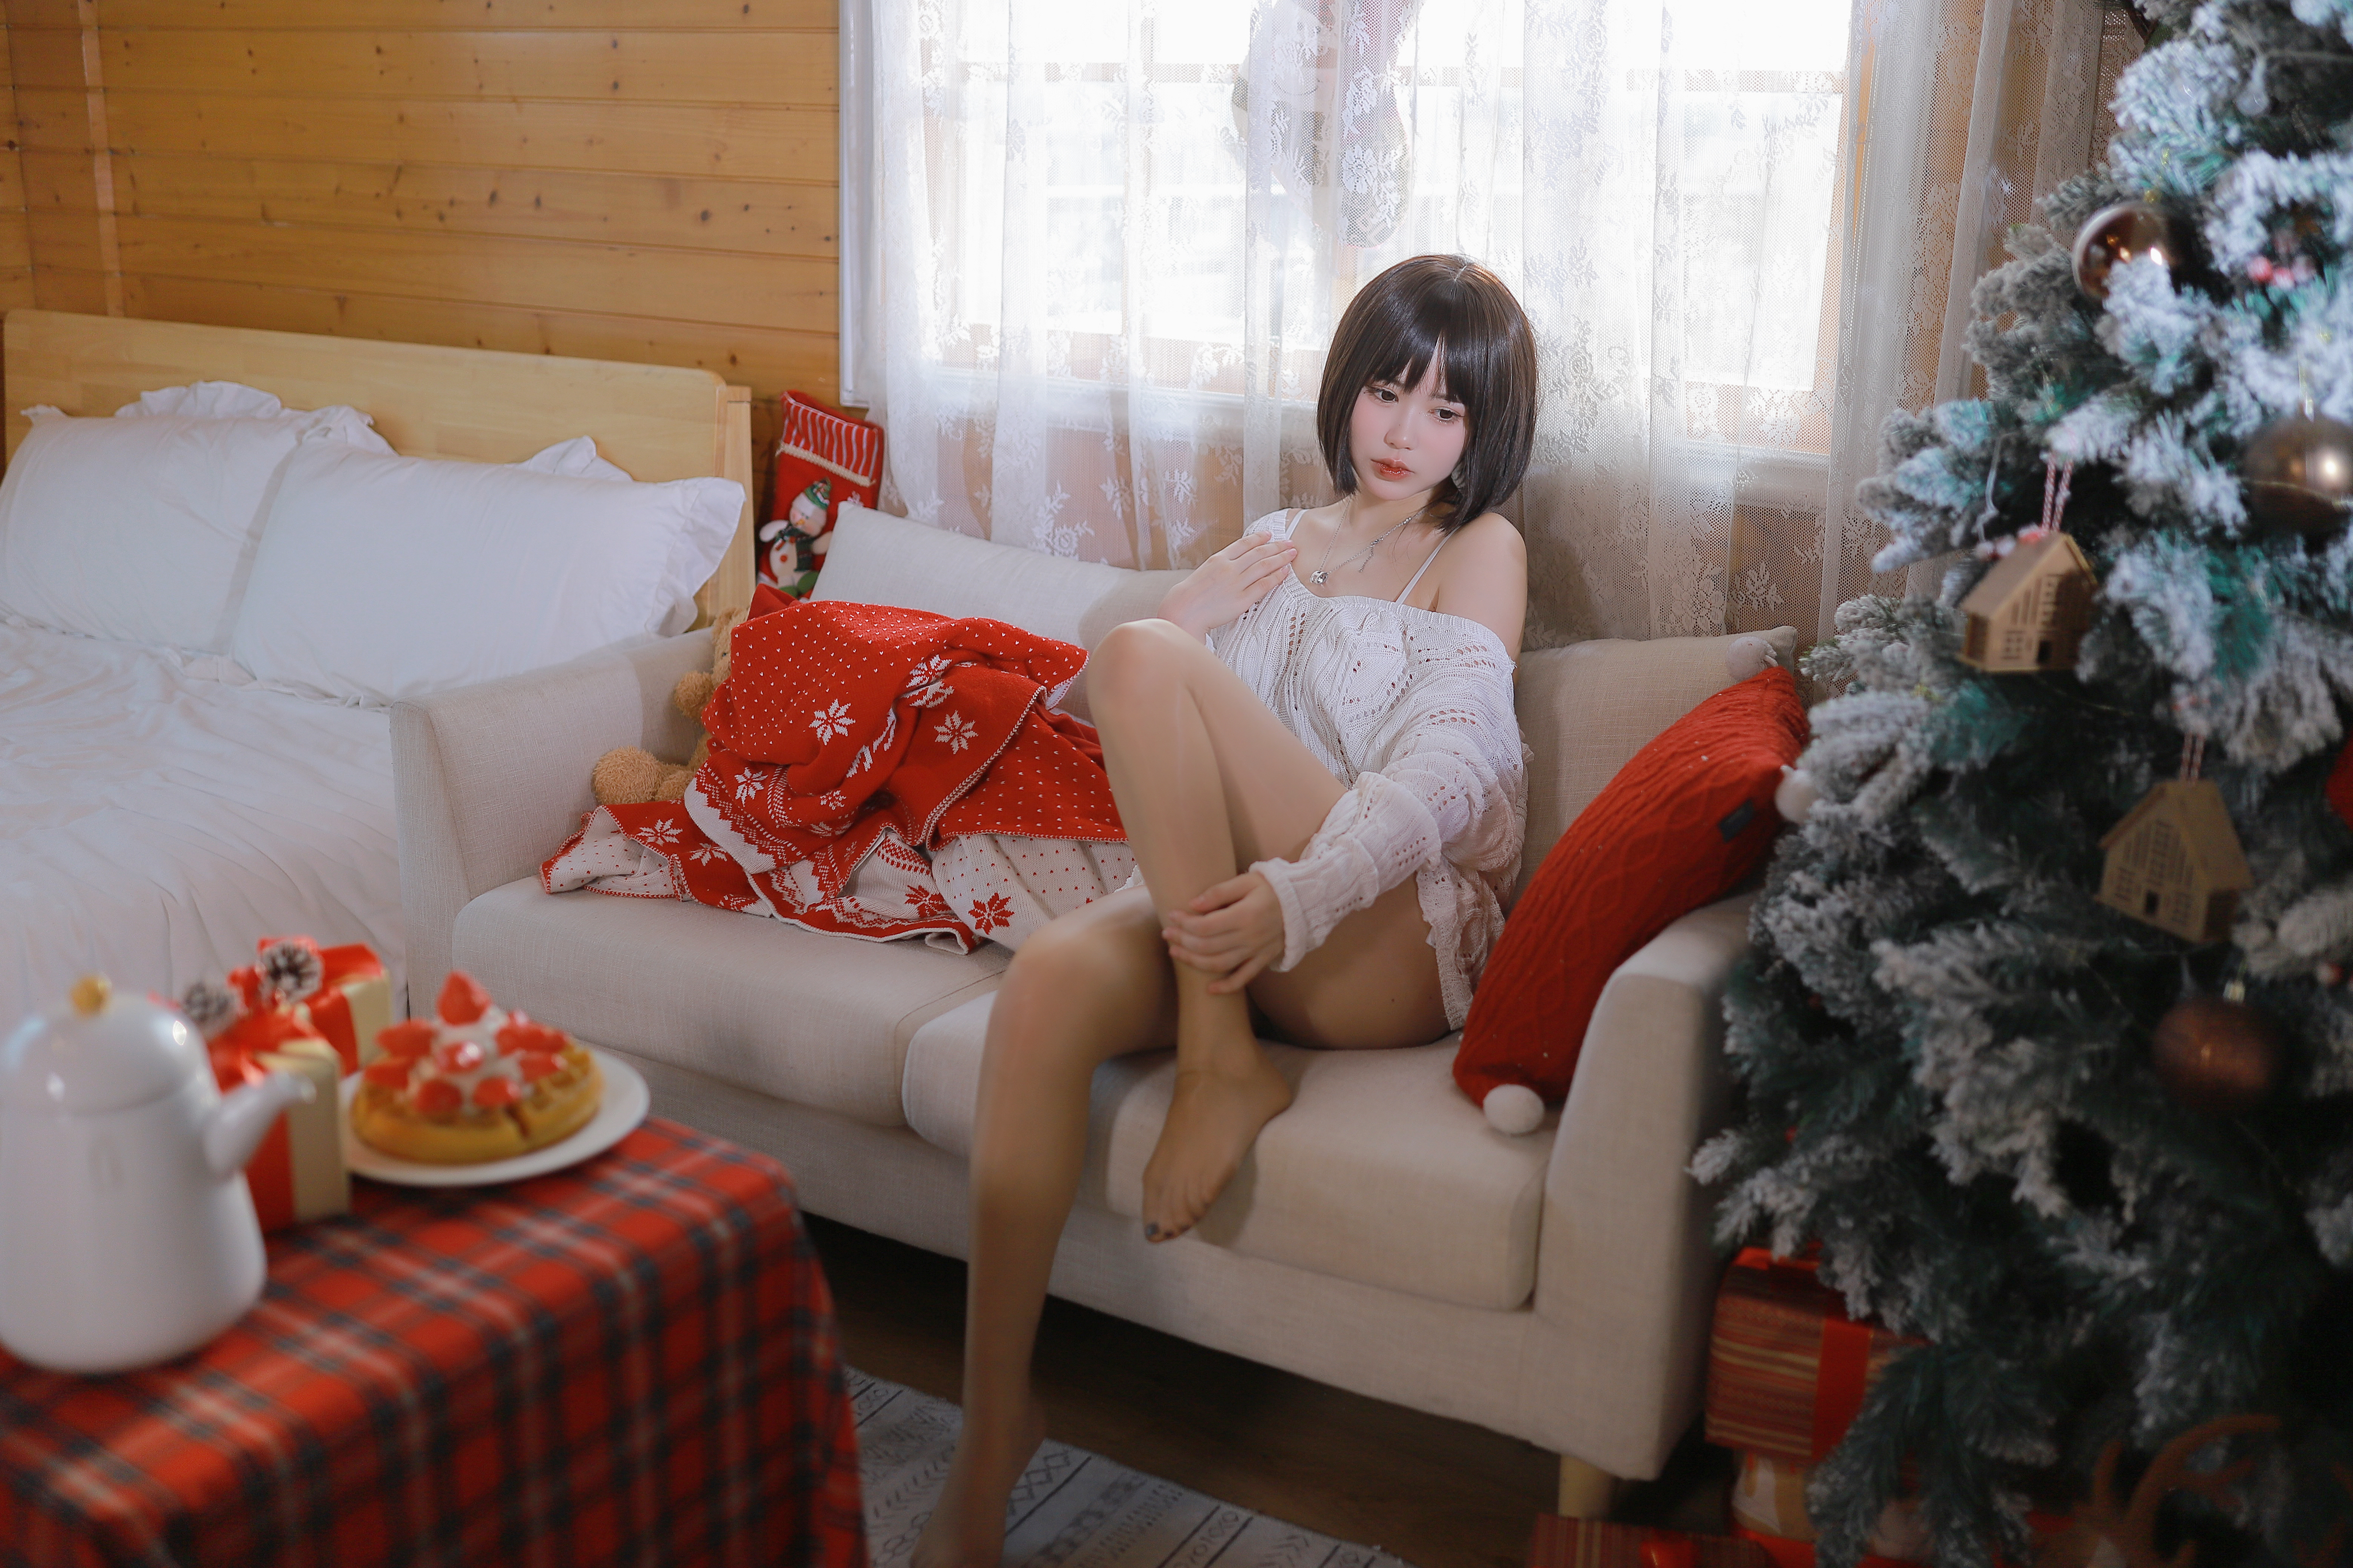 People 4096x2730 Tina (Asian model) big boobs on sofa sitting legs feet Asian women Christmas